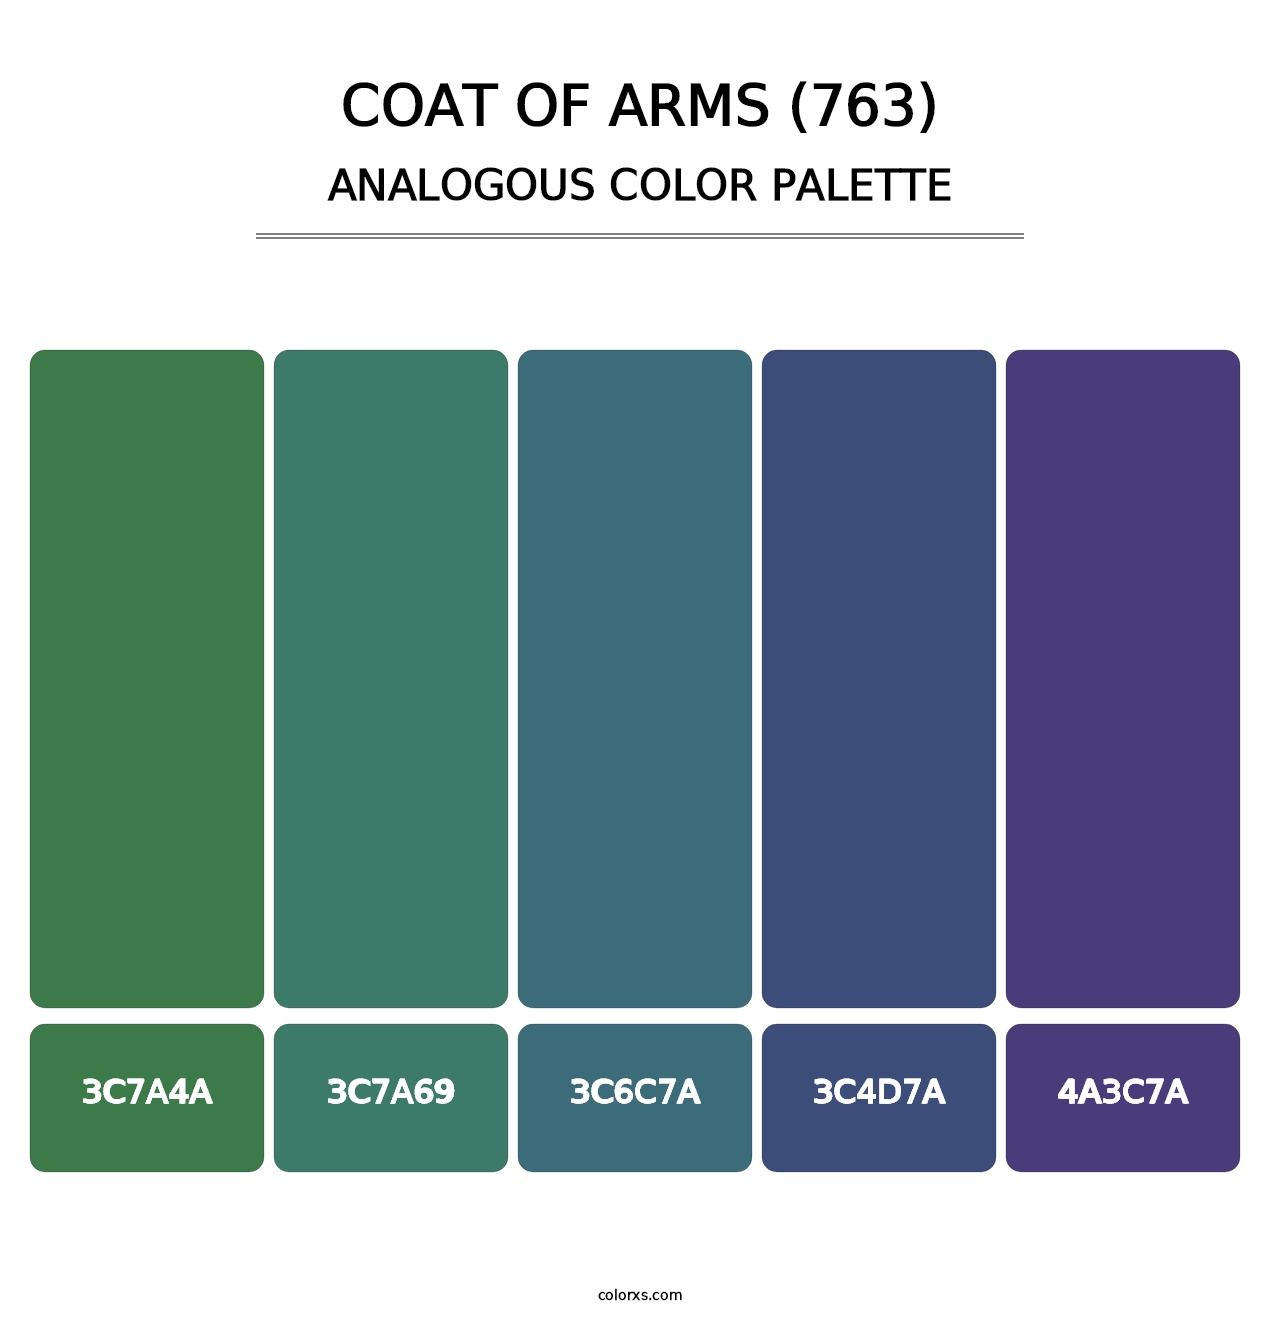 Coat of Arms (763) - Analogous Color Palette